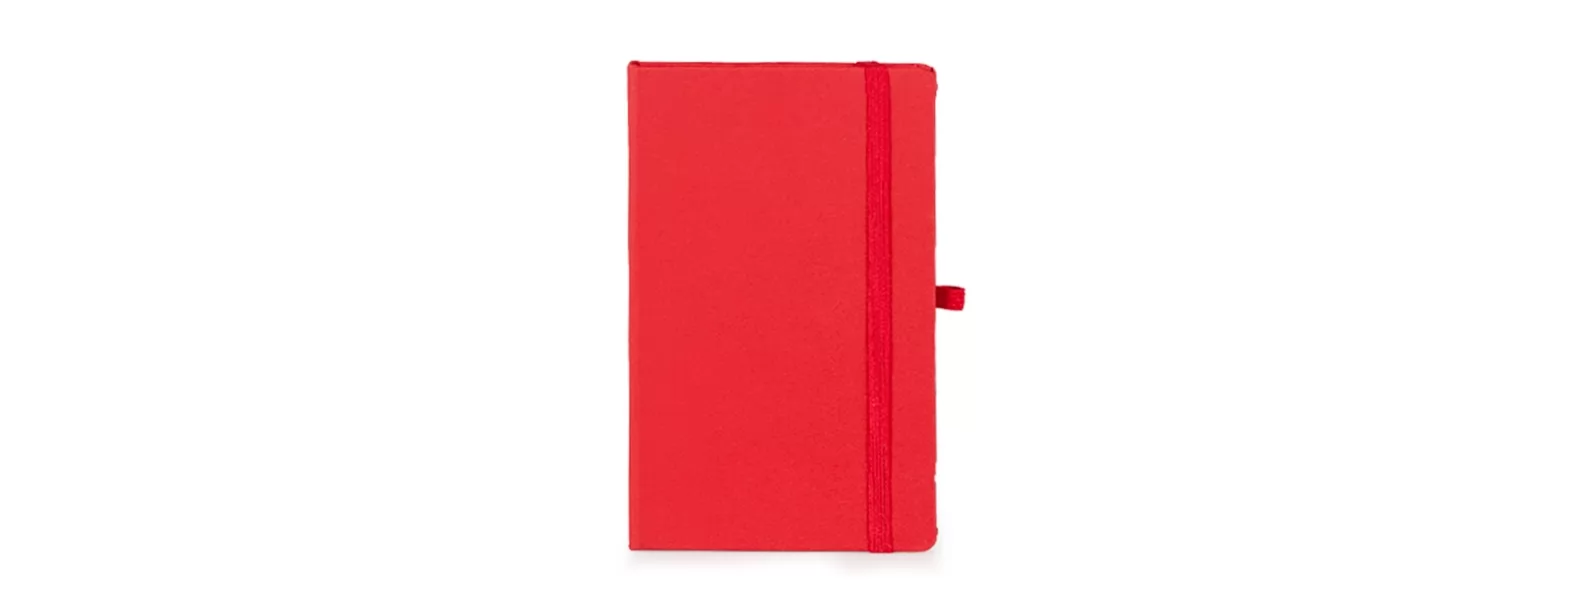 Caderneta S/ Pauta Vermelho - 14x21 Cm